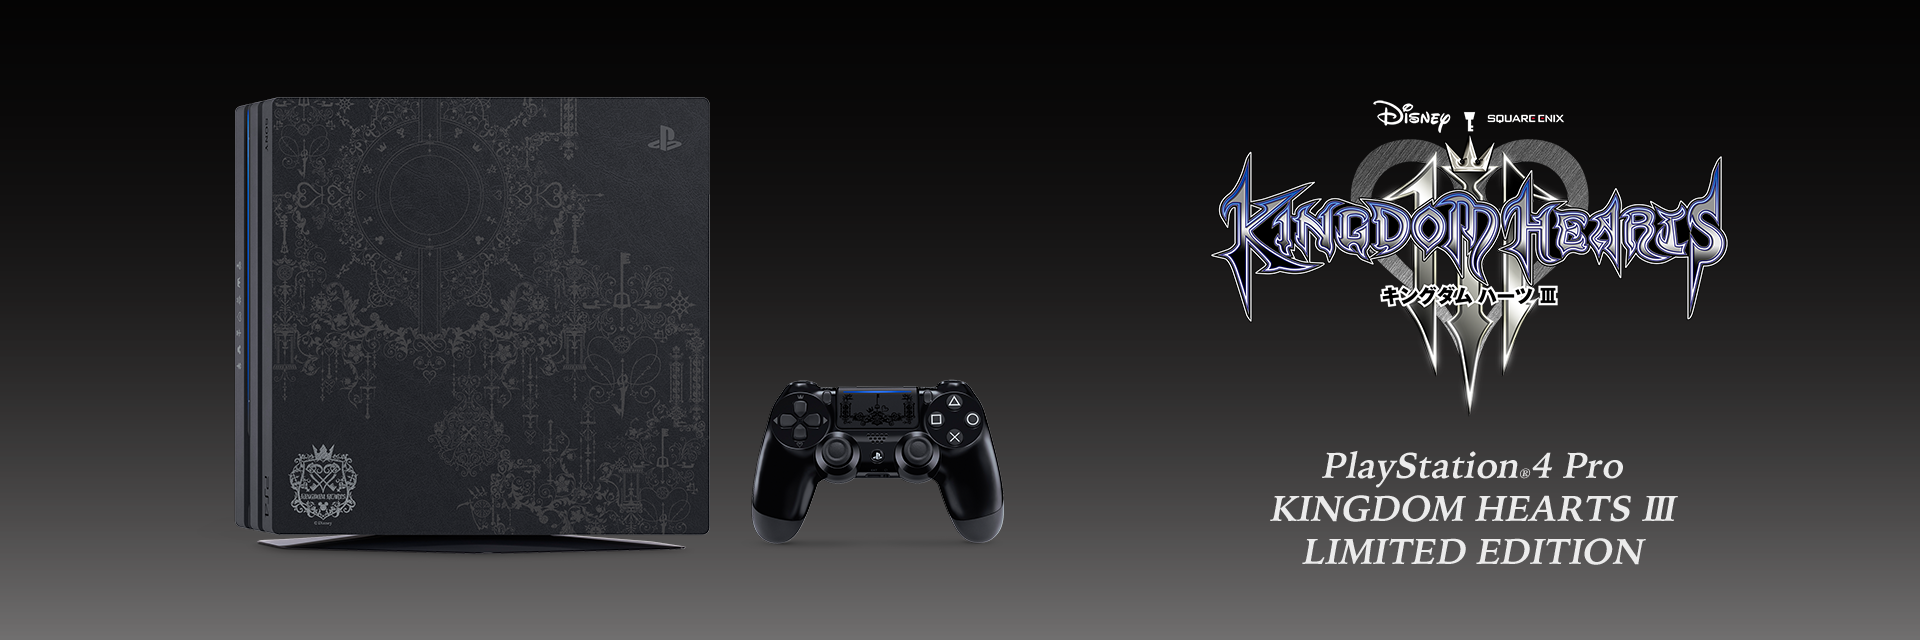 PlayStation 4 Pro KINGDOM HEARTS III LIMITED EDITION (CUHJ-10025